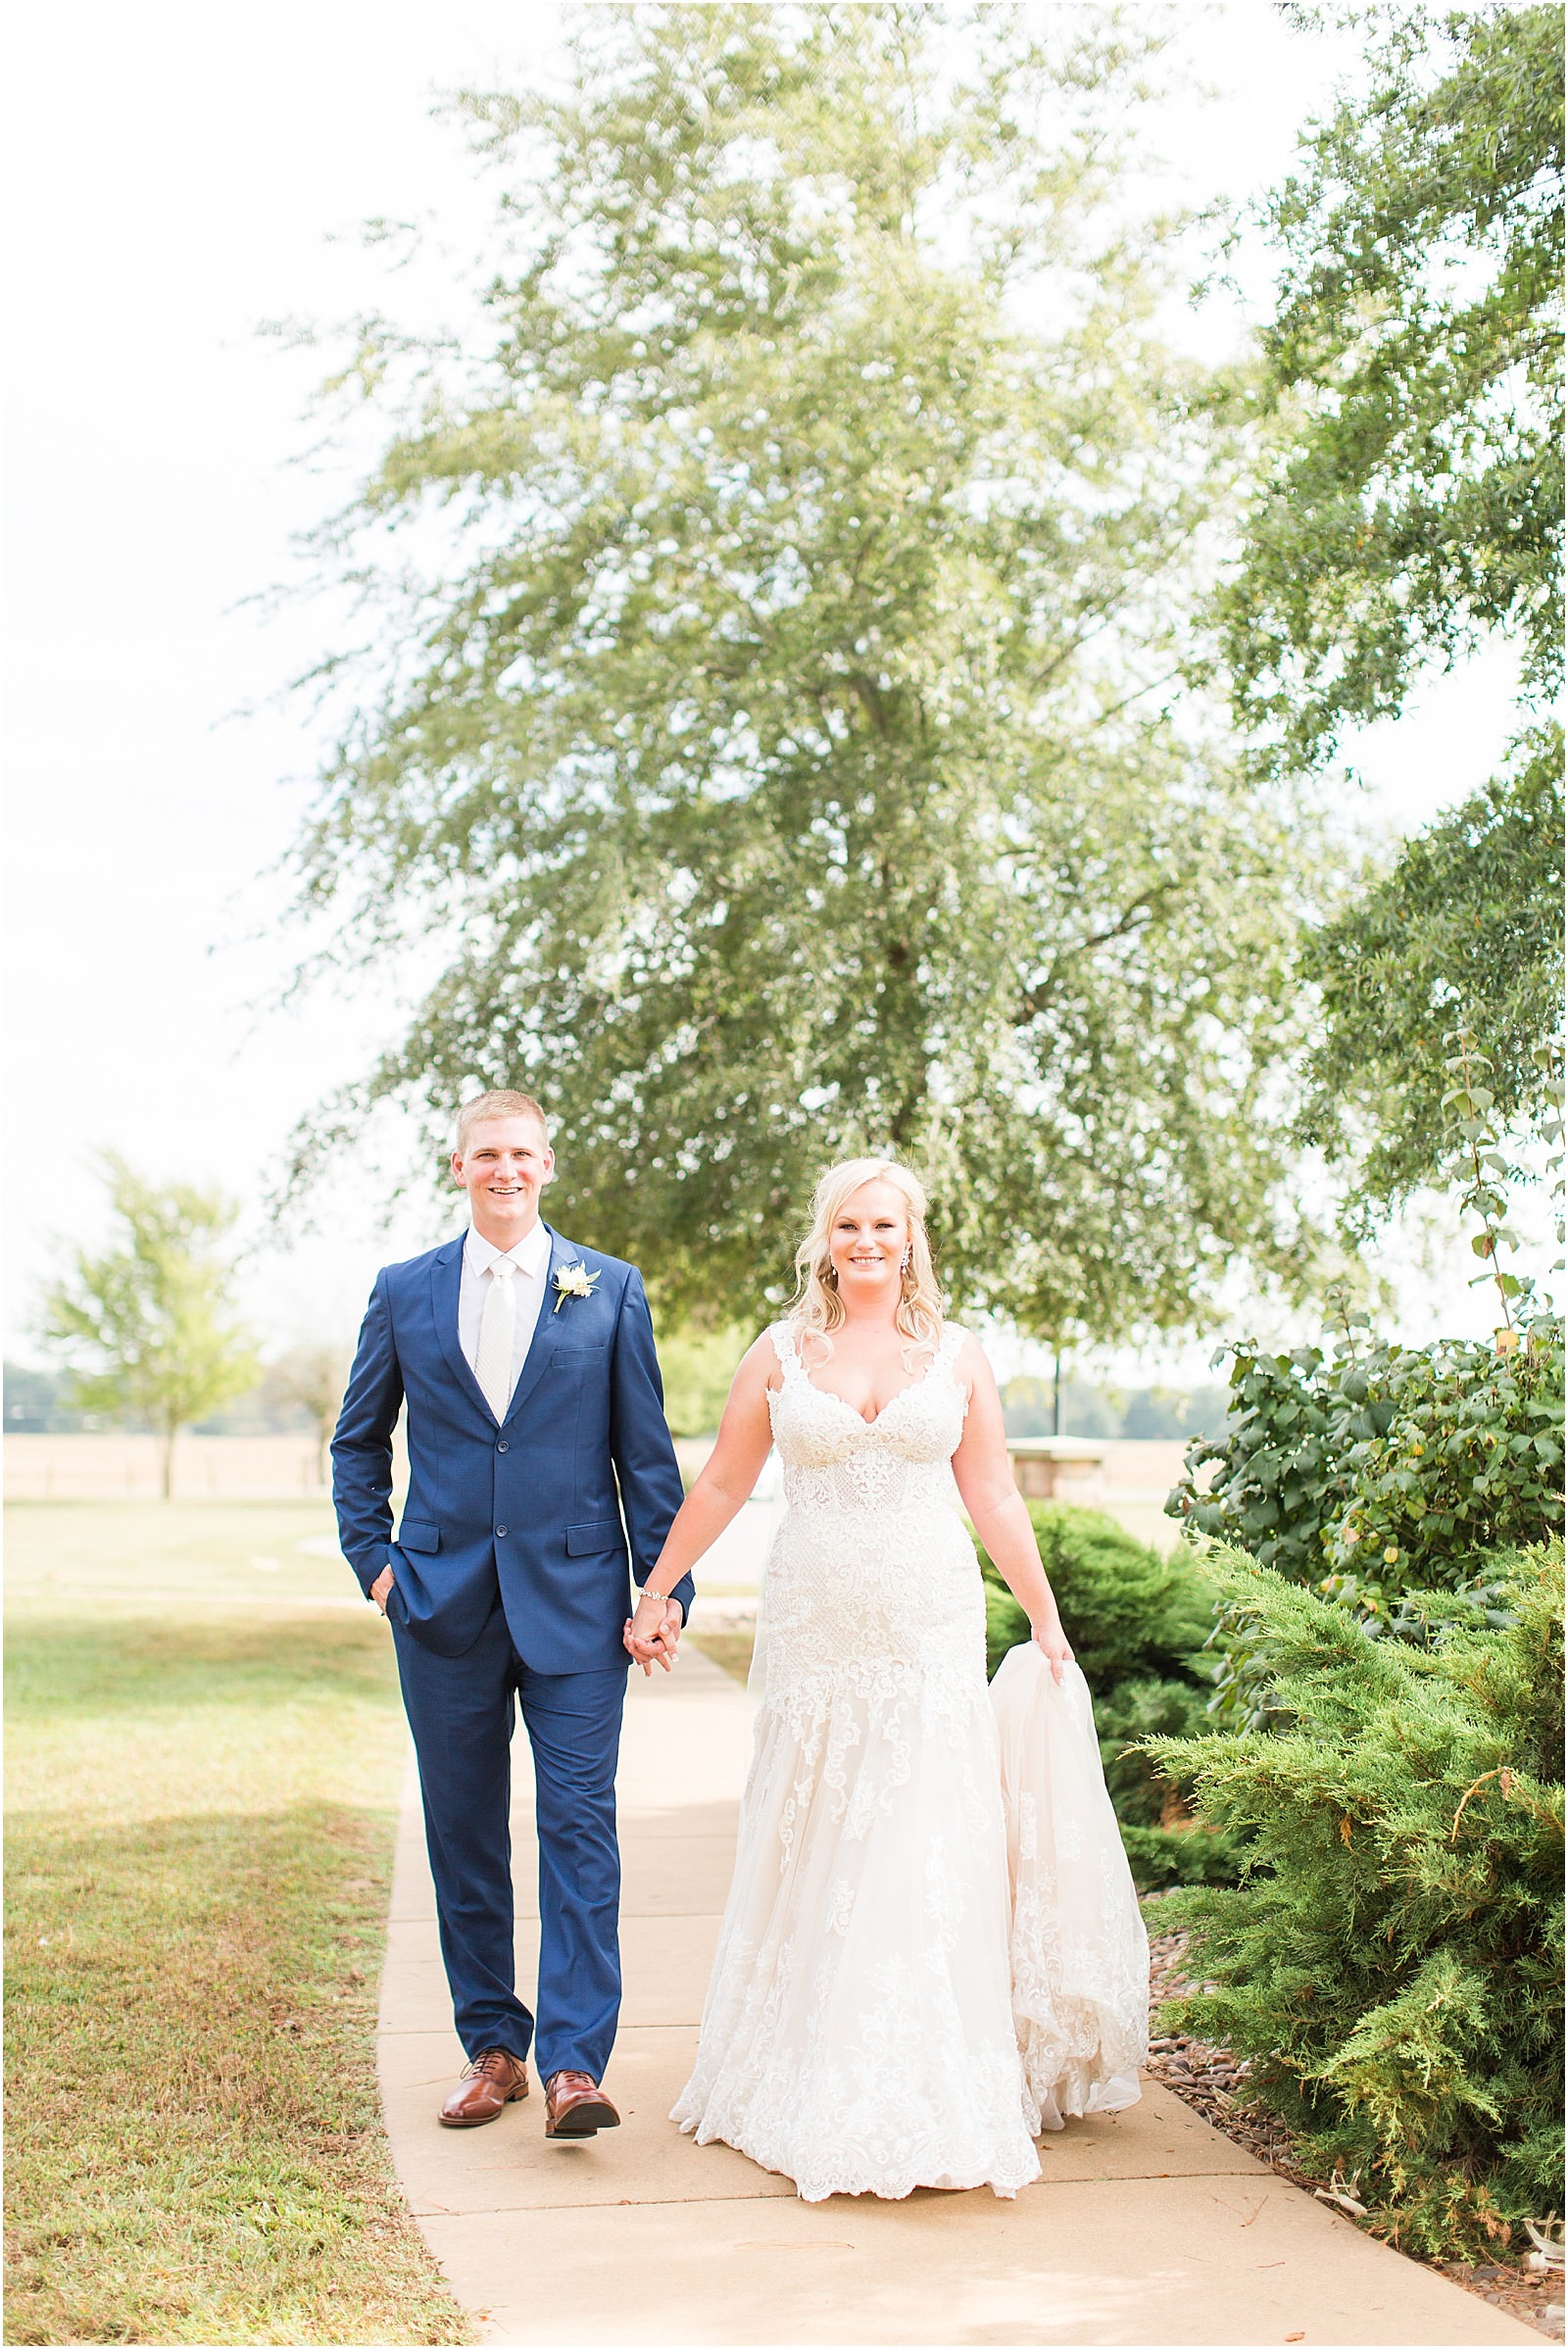 Kelsey and Caleb | Walkers Bluff Winery Wedding | Bret and Brandie Photography050.jpg